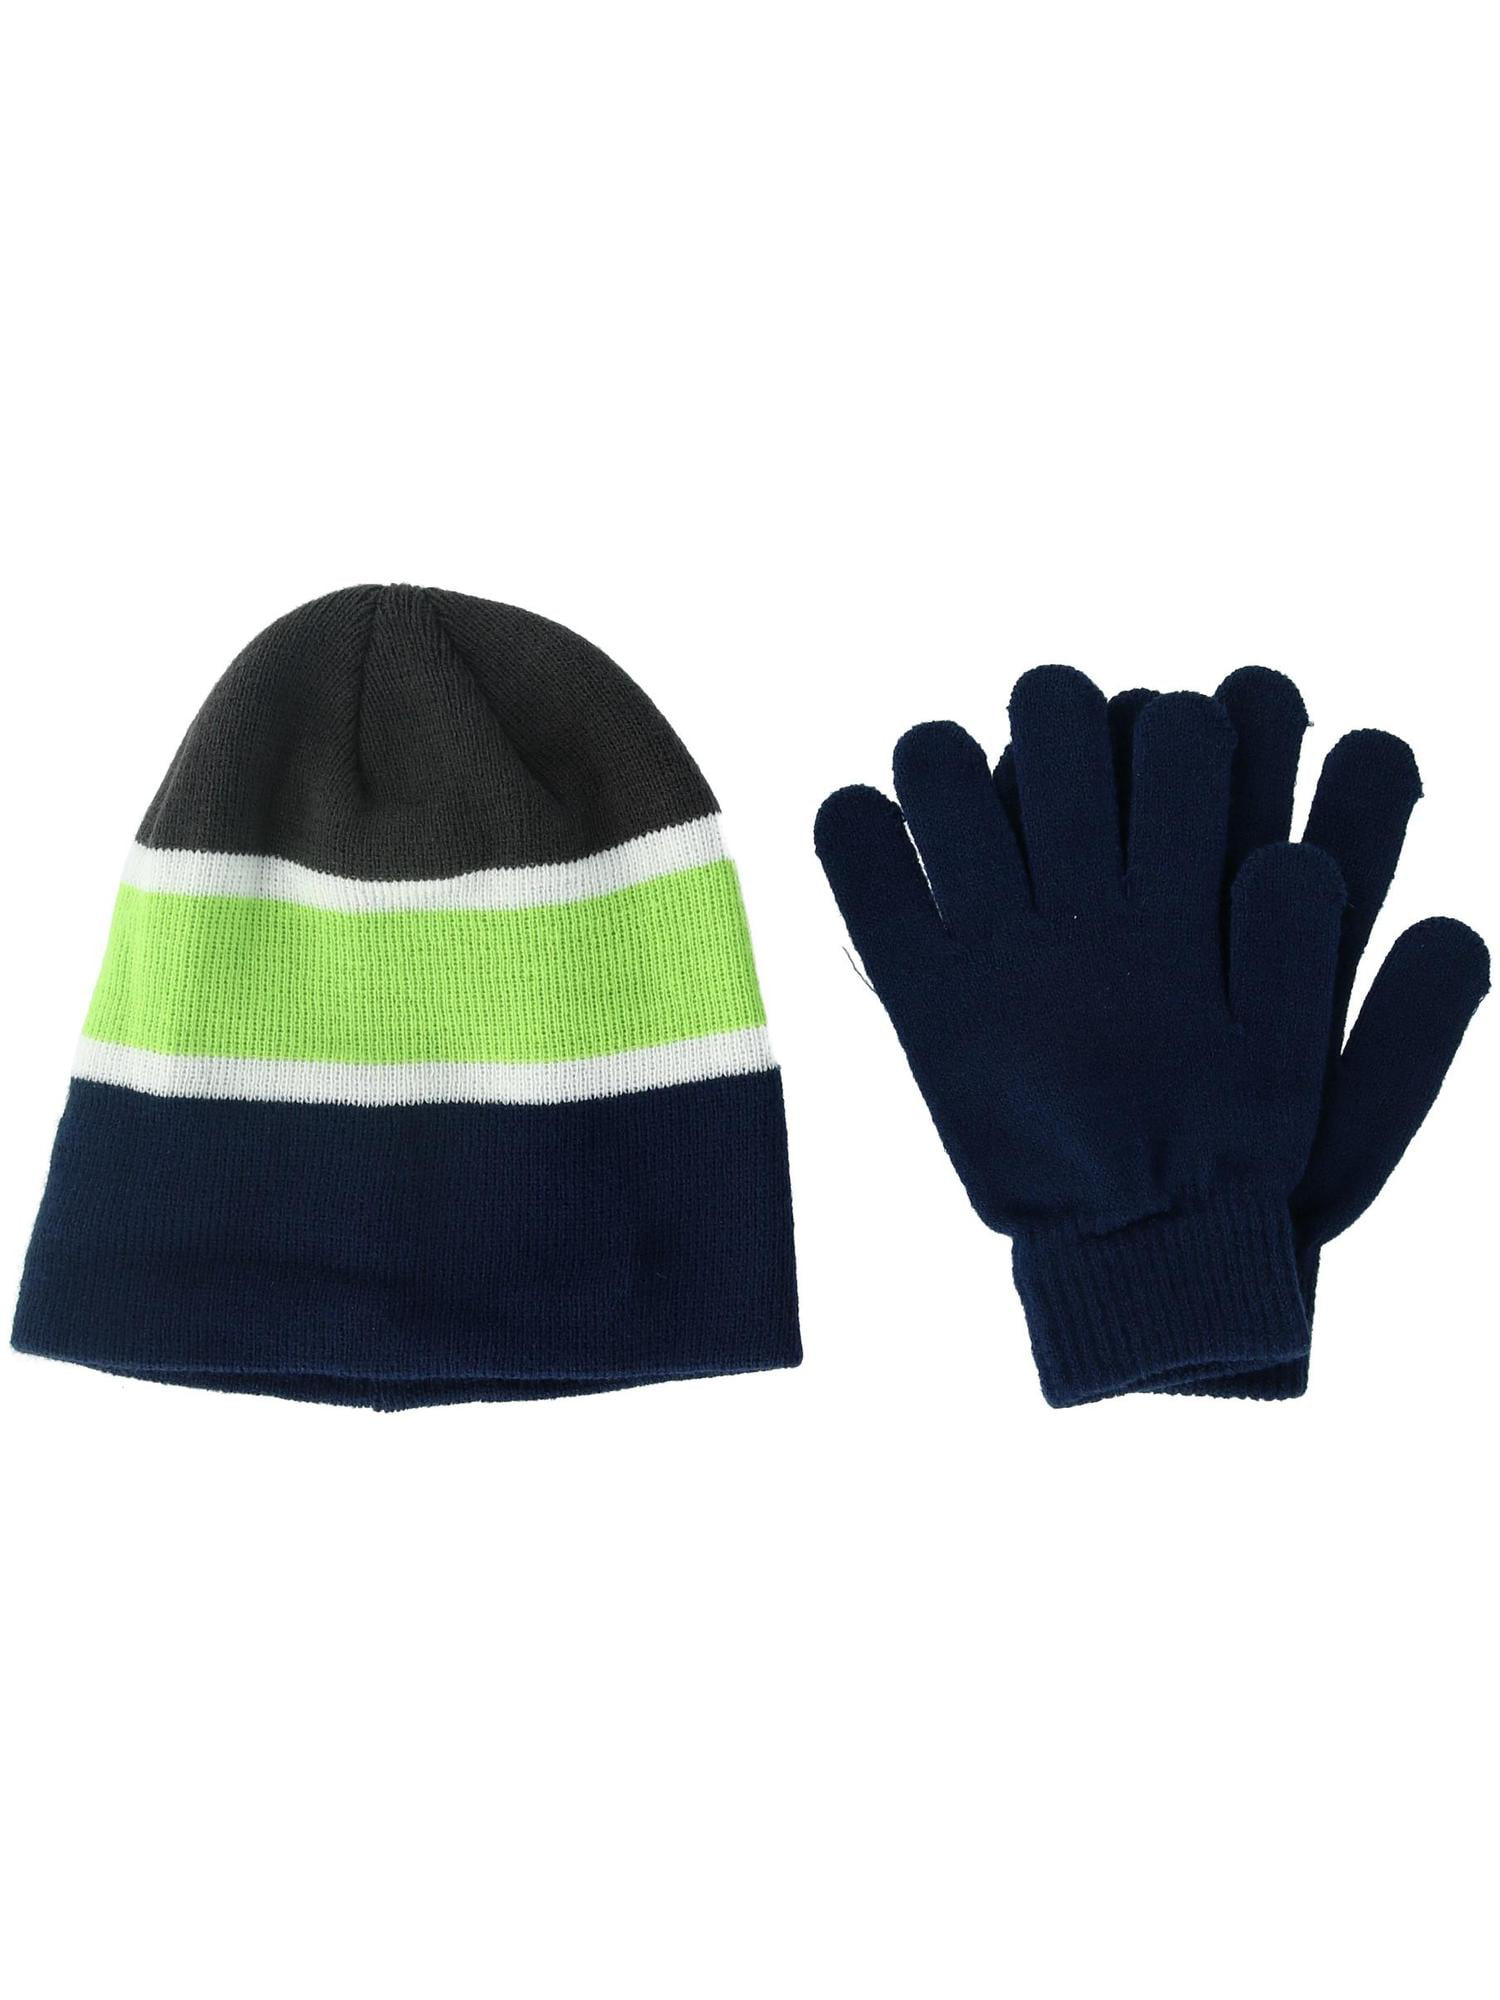 Grand Sierra Kids 4-7 Striped Hat and Solid Gloves Winter Set